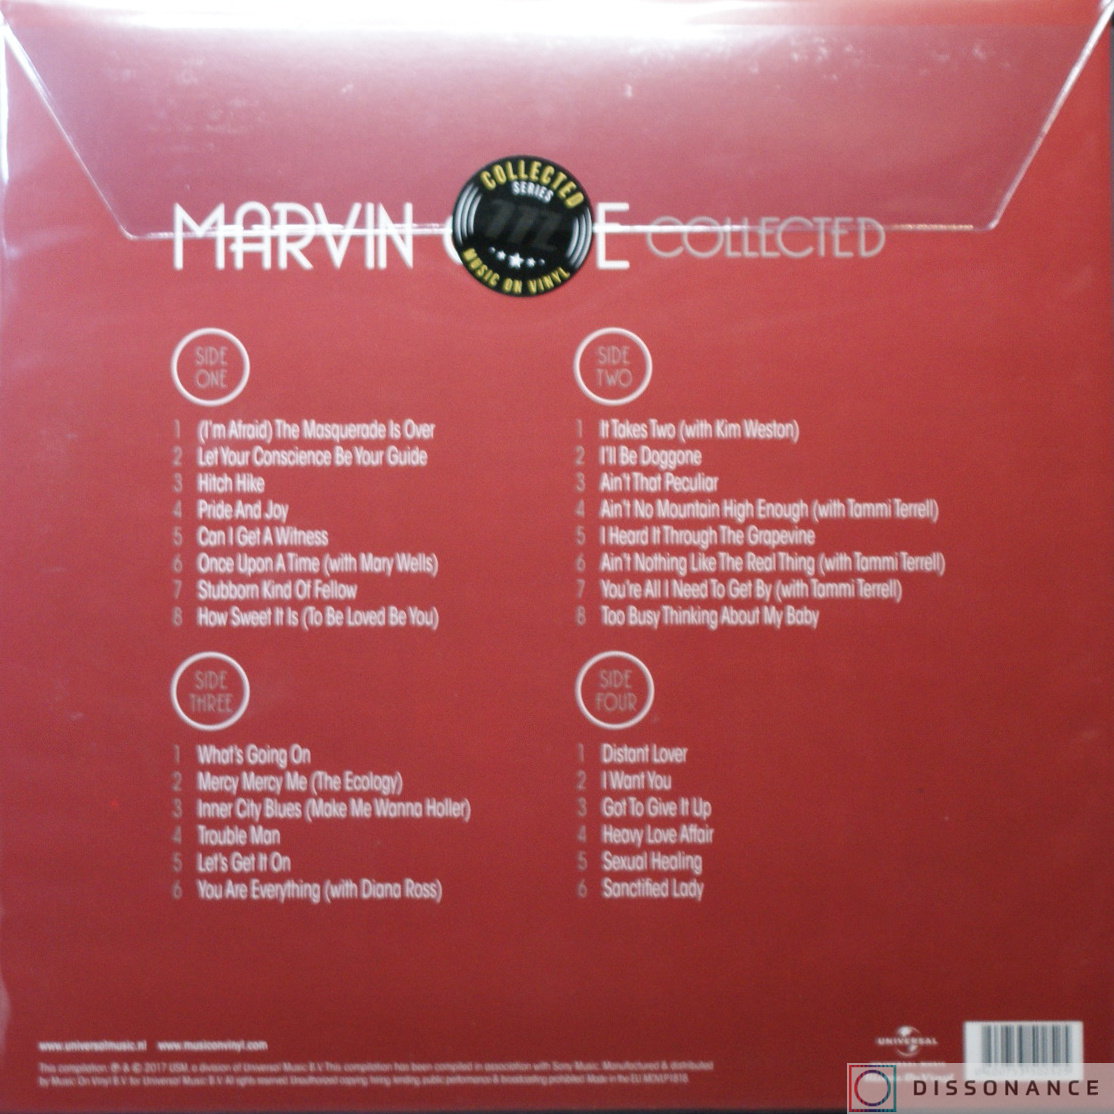 Виниловая пластинка Marvin Gaye - Collected (2017) - фото 1